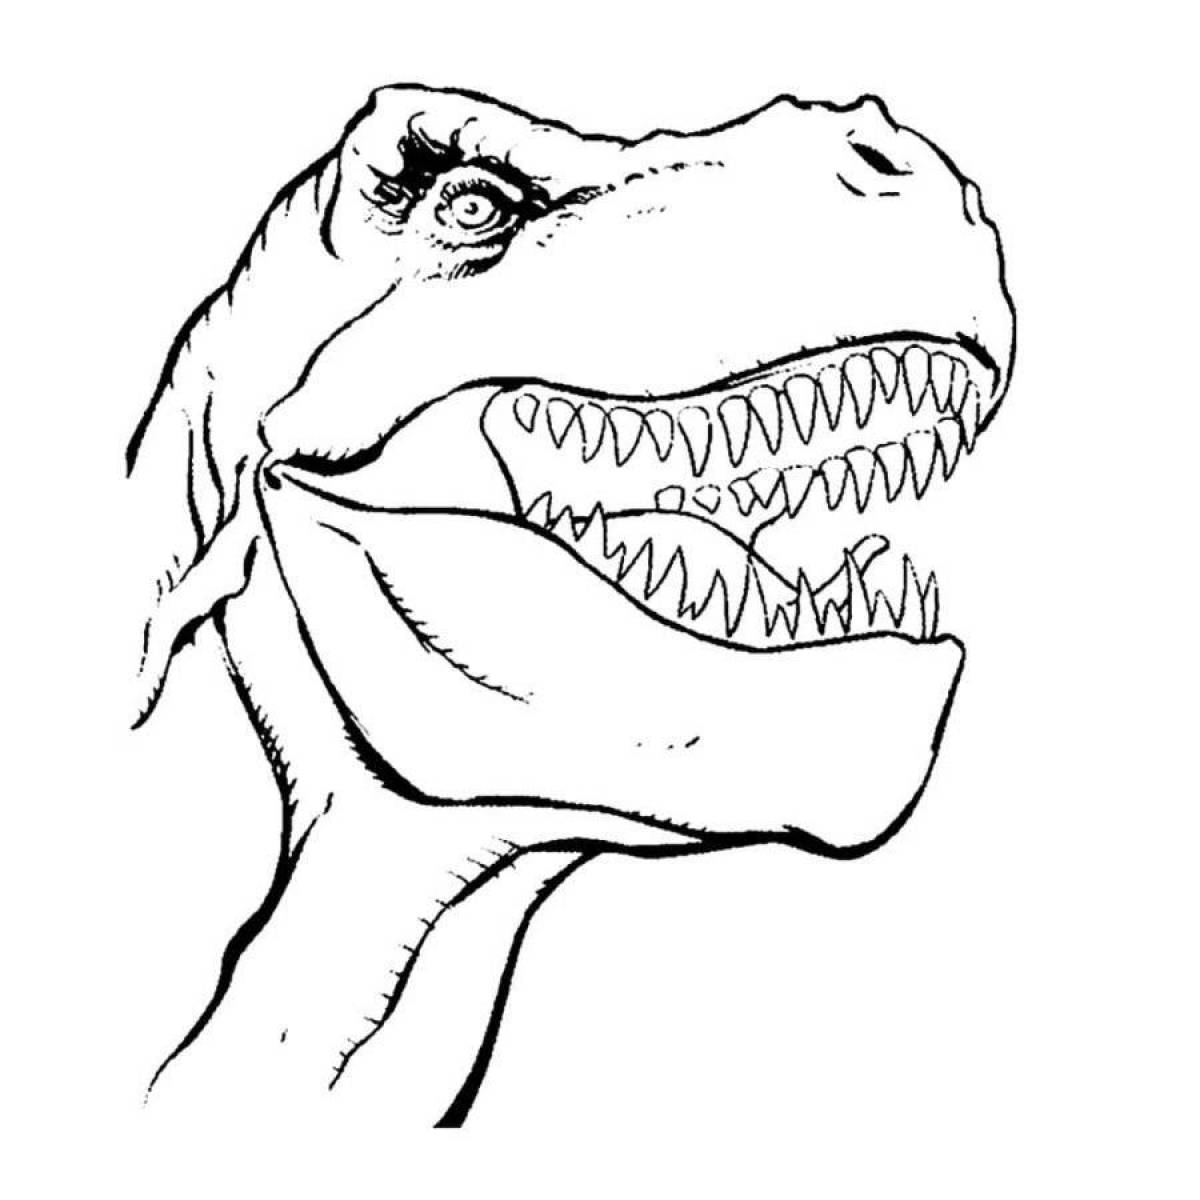 Terrifying tyrannosaurus rex coloring book